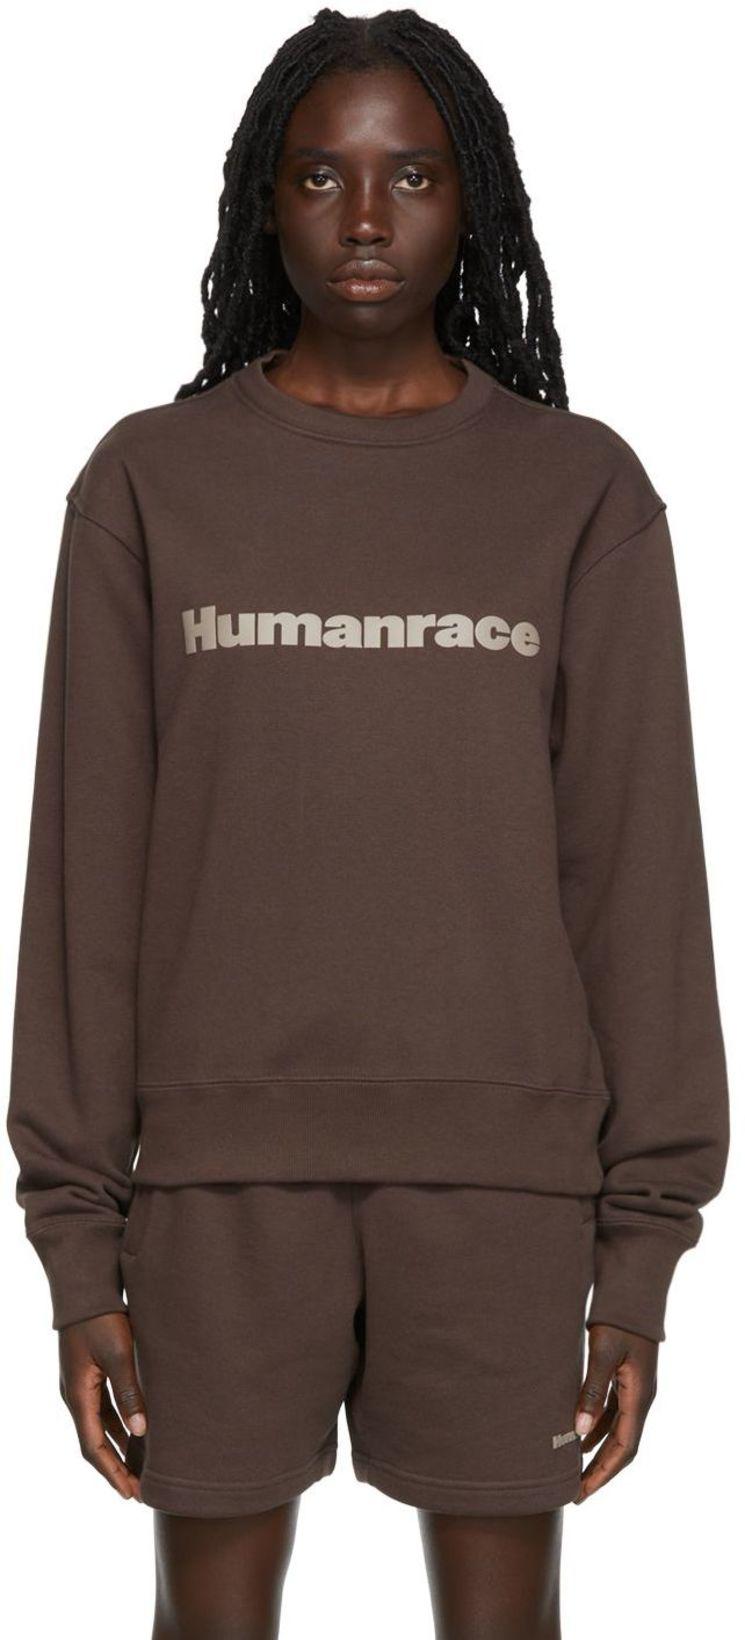 Brown Humanrace Basics Sweatshirt by ADIDAS X HUMANRACE BY PHARRELL WILLIAMS